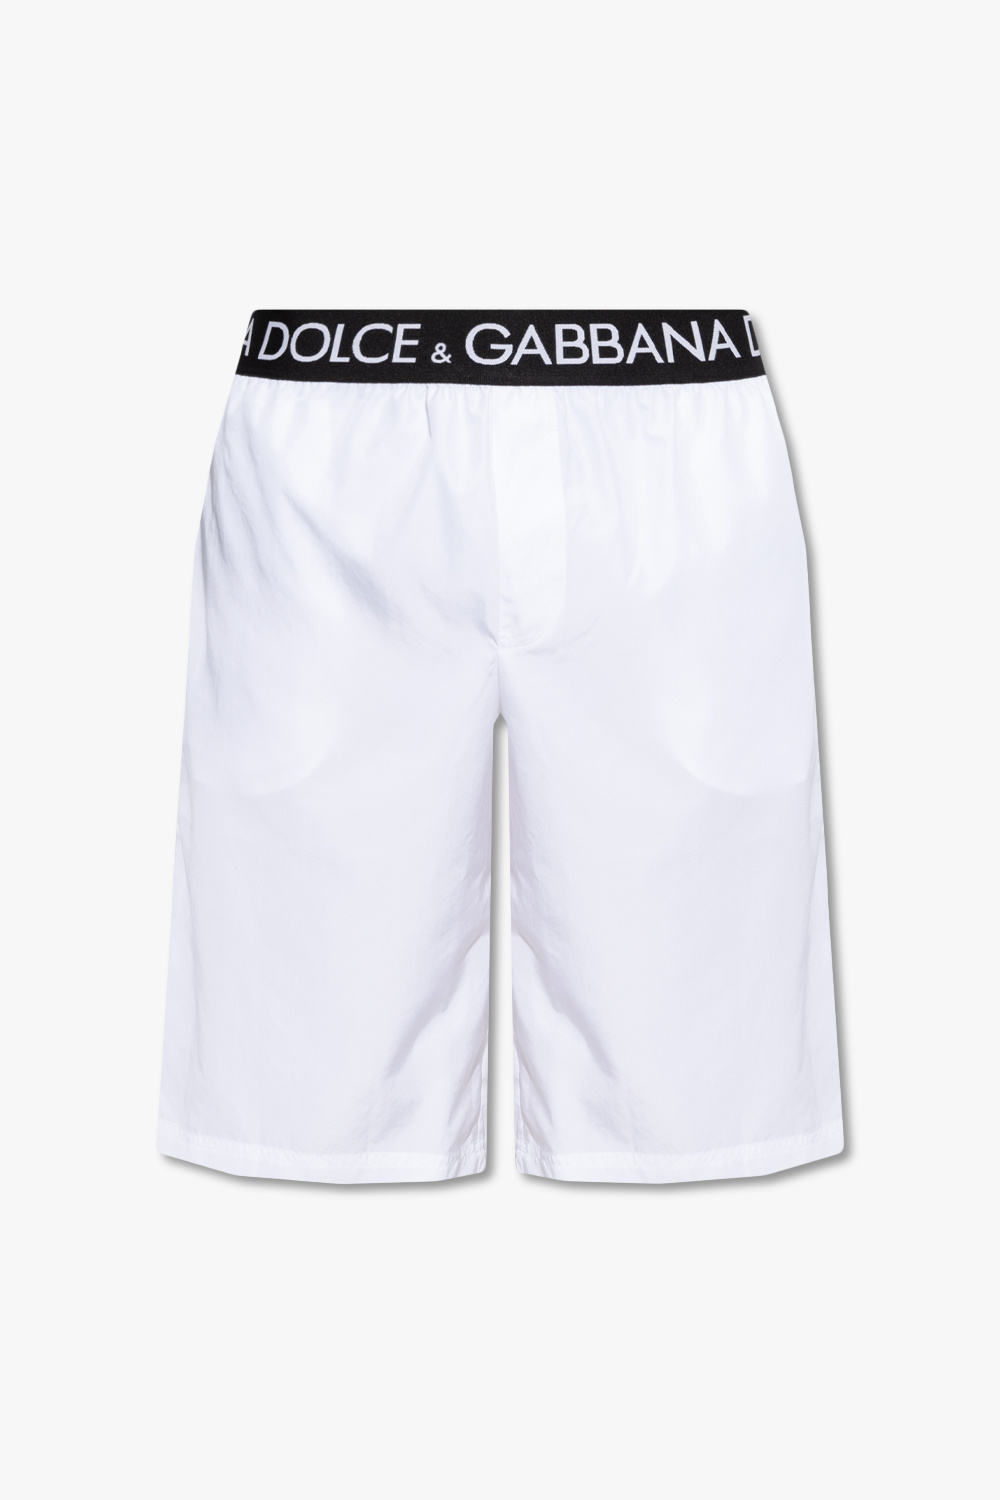 White Boxers with logo Dolce & Gabbana - Vitkac France